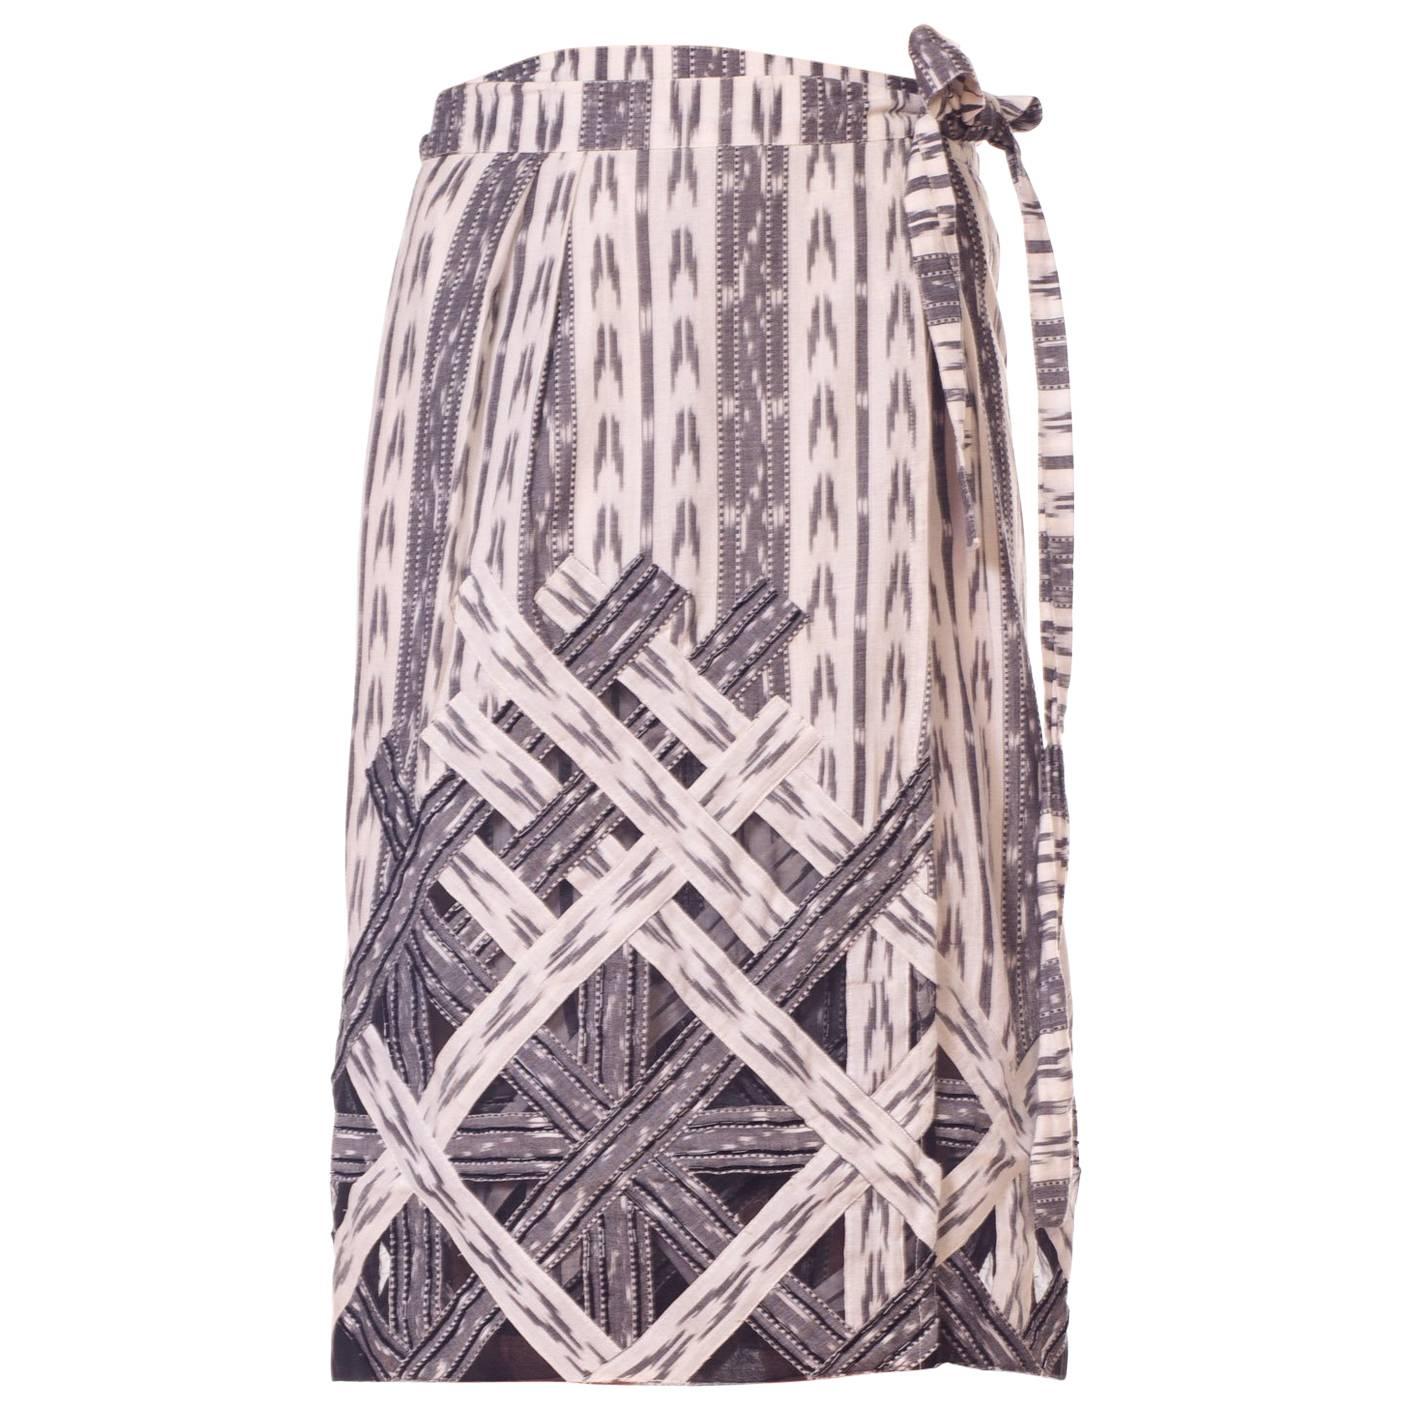 Oscar De La Renta Cotton Ikat Skirt with Appliqué and Sheer Panels